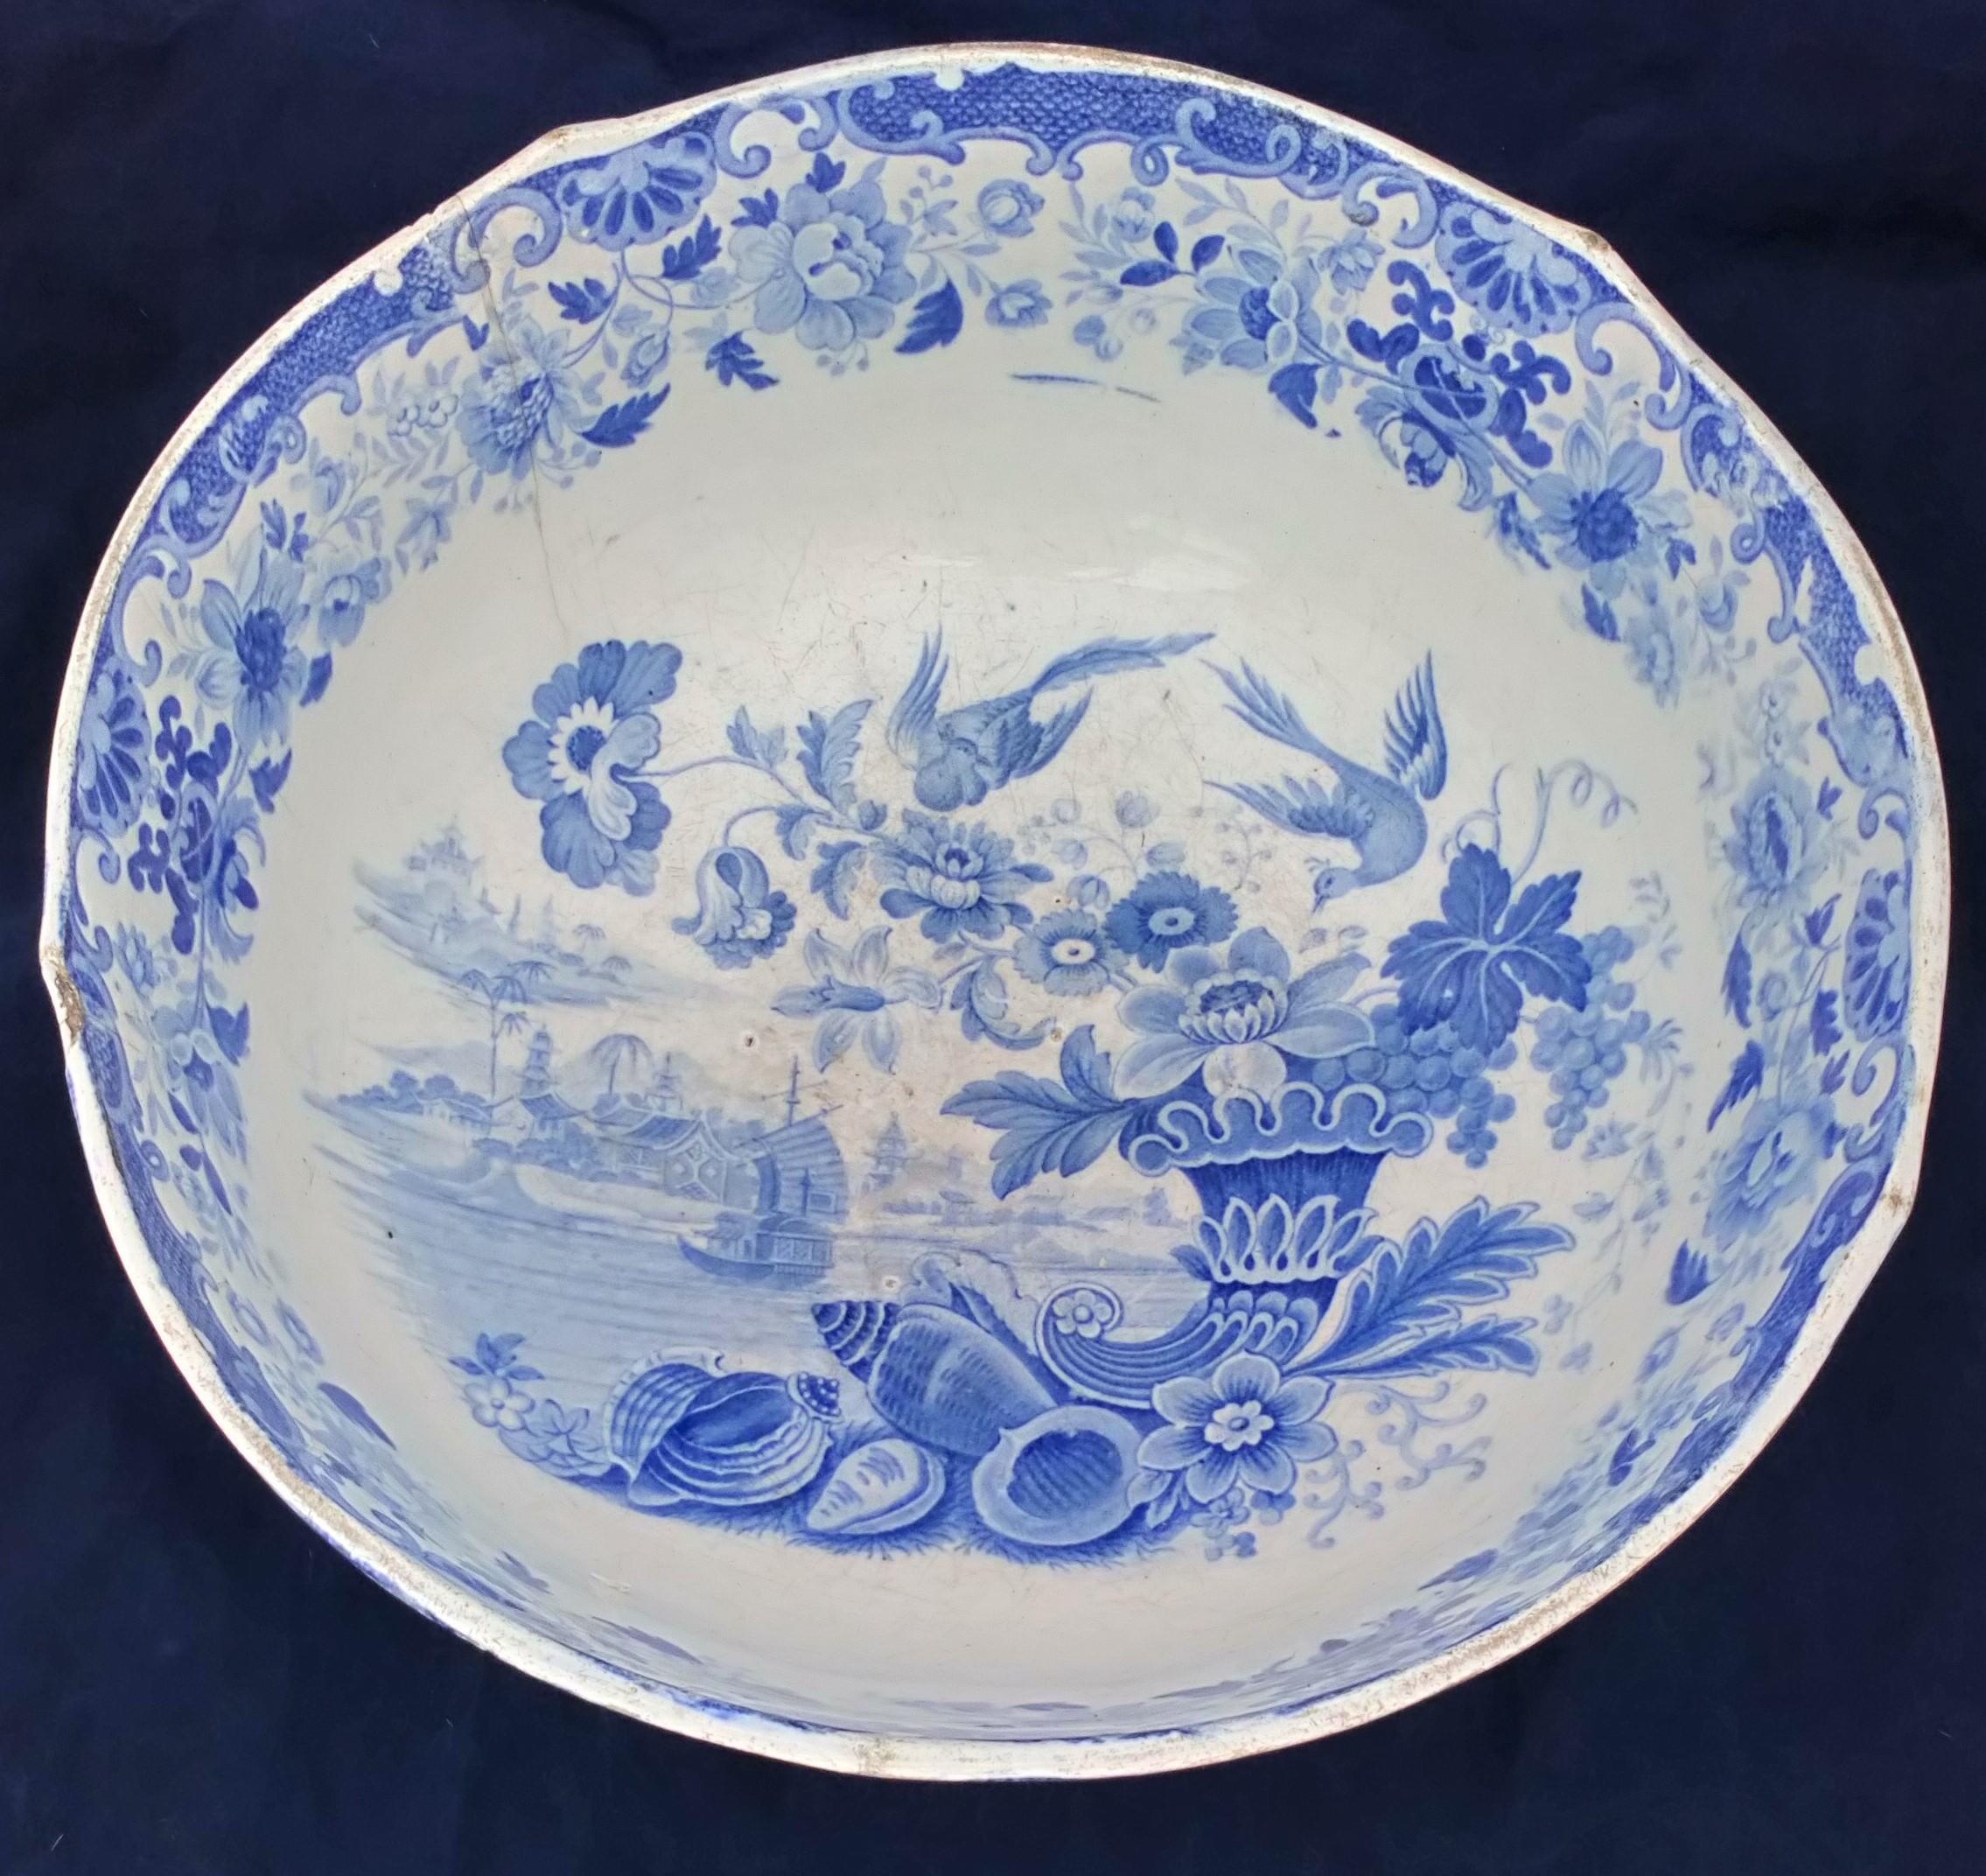 Antique Pearlware Punch Bowl Transfer Printed Oriental Shells Cornucopia Pattern circa 1825